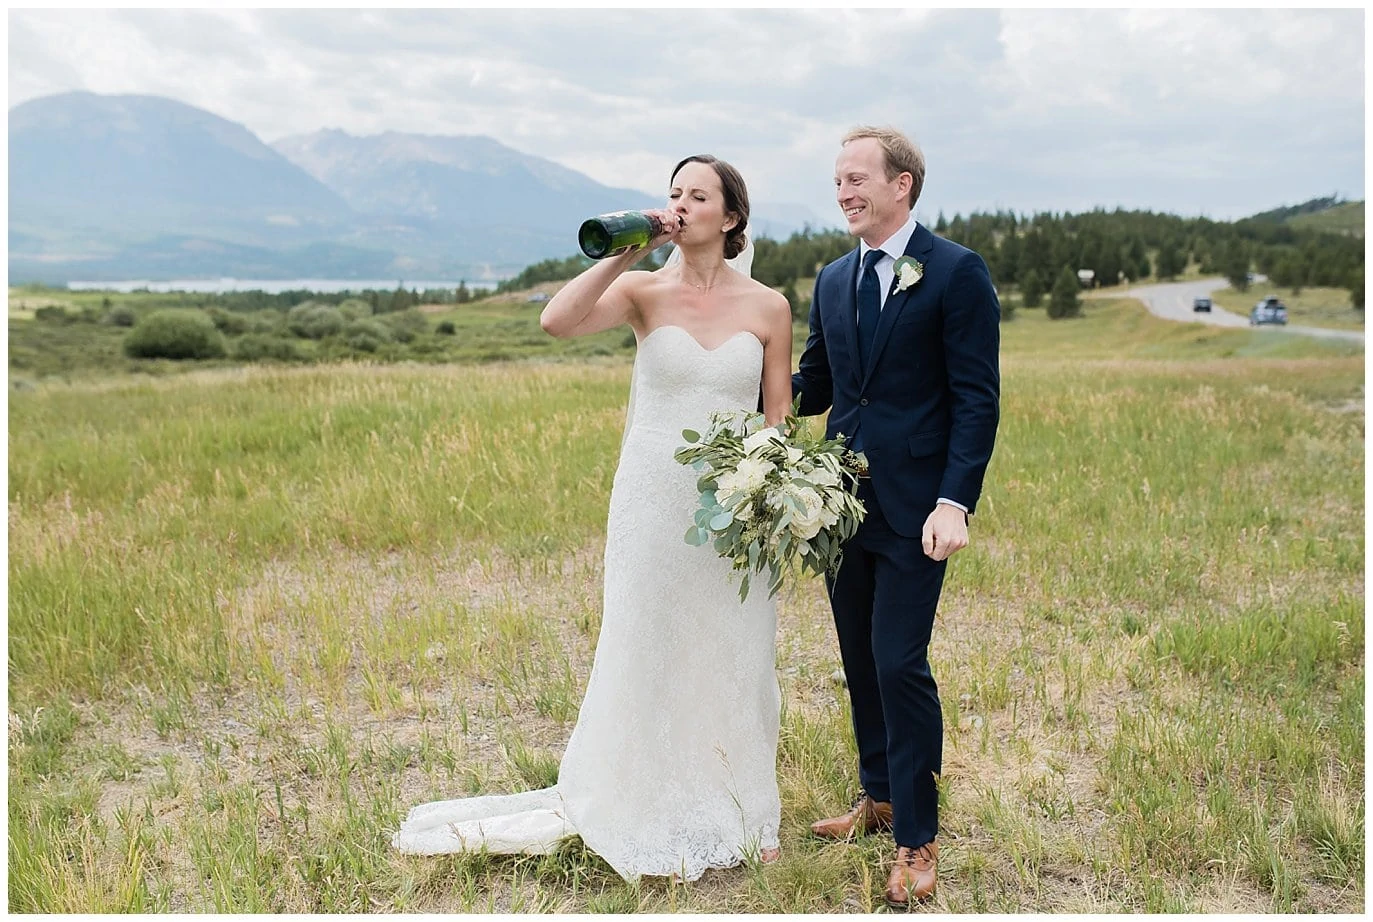 celebratory champagne before wedding ceremony at Arapahoe Basin Black Mountain Lodge Wedding by Dillon Wedding Photographer Jennie Crate